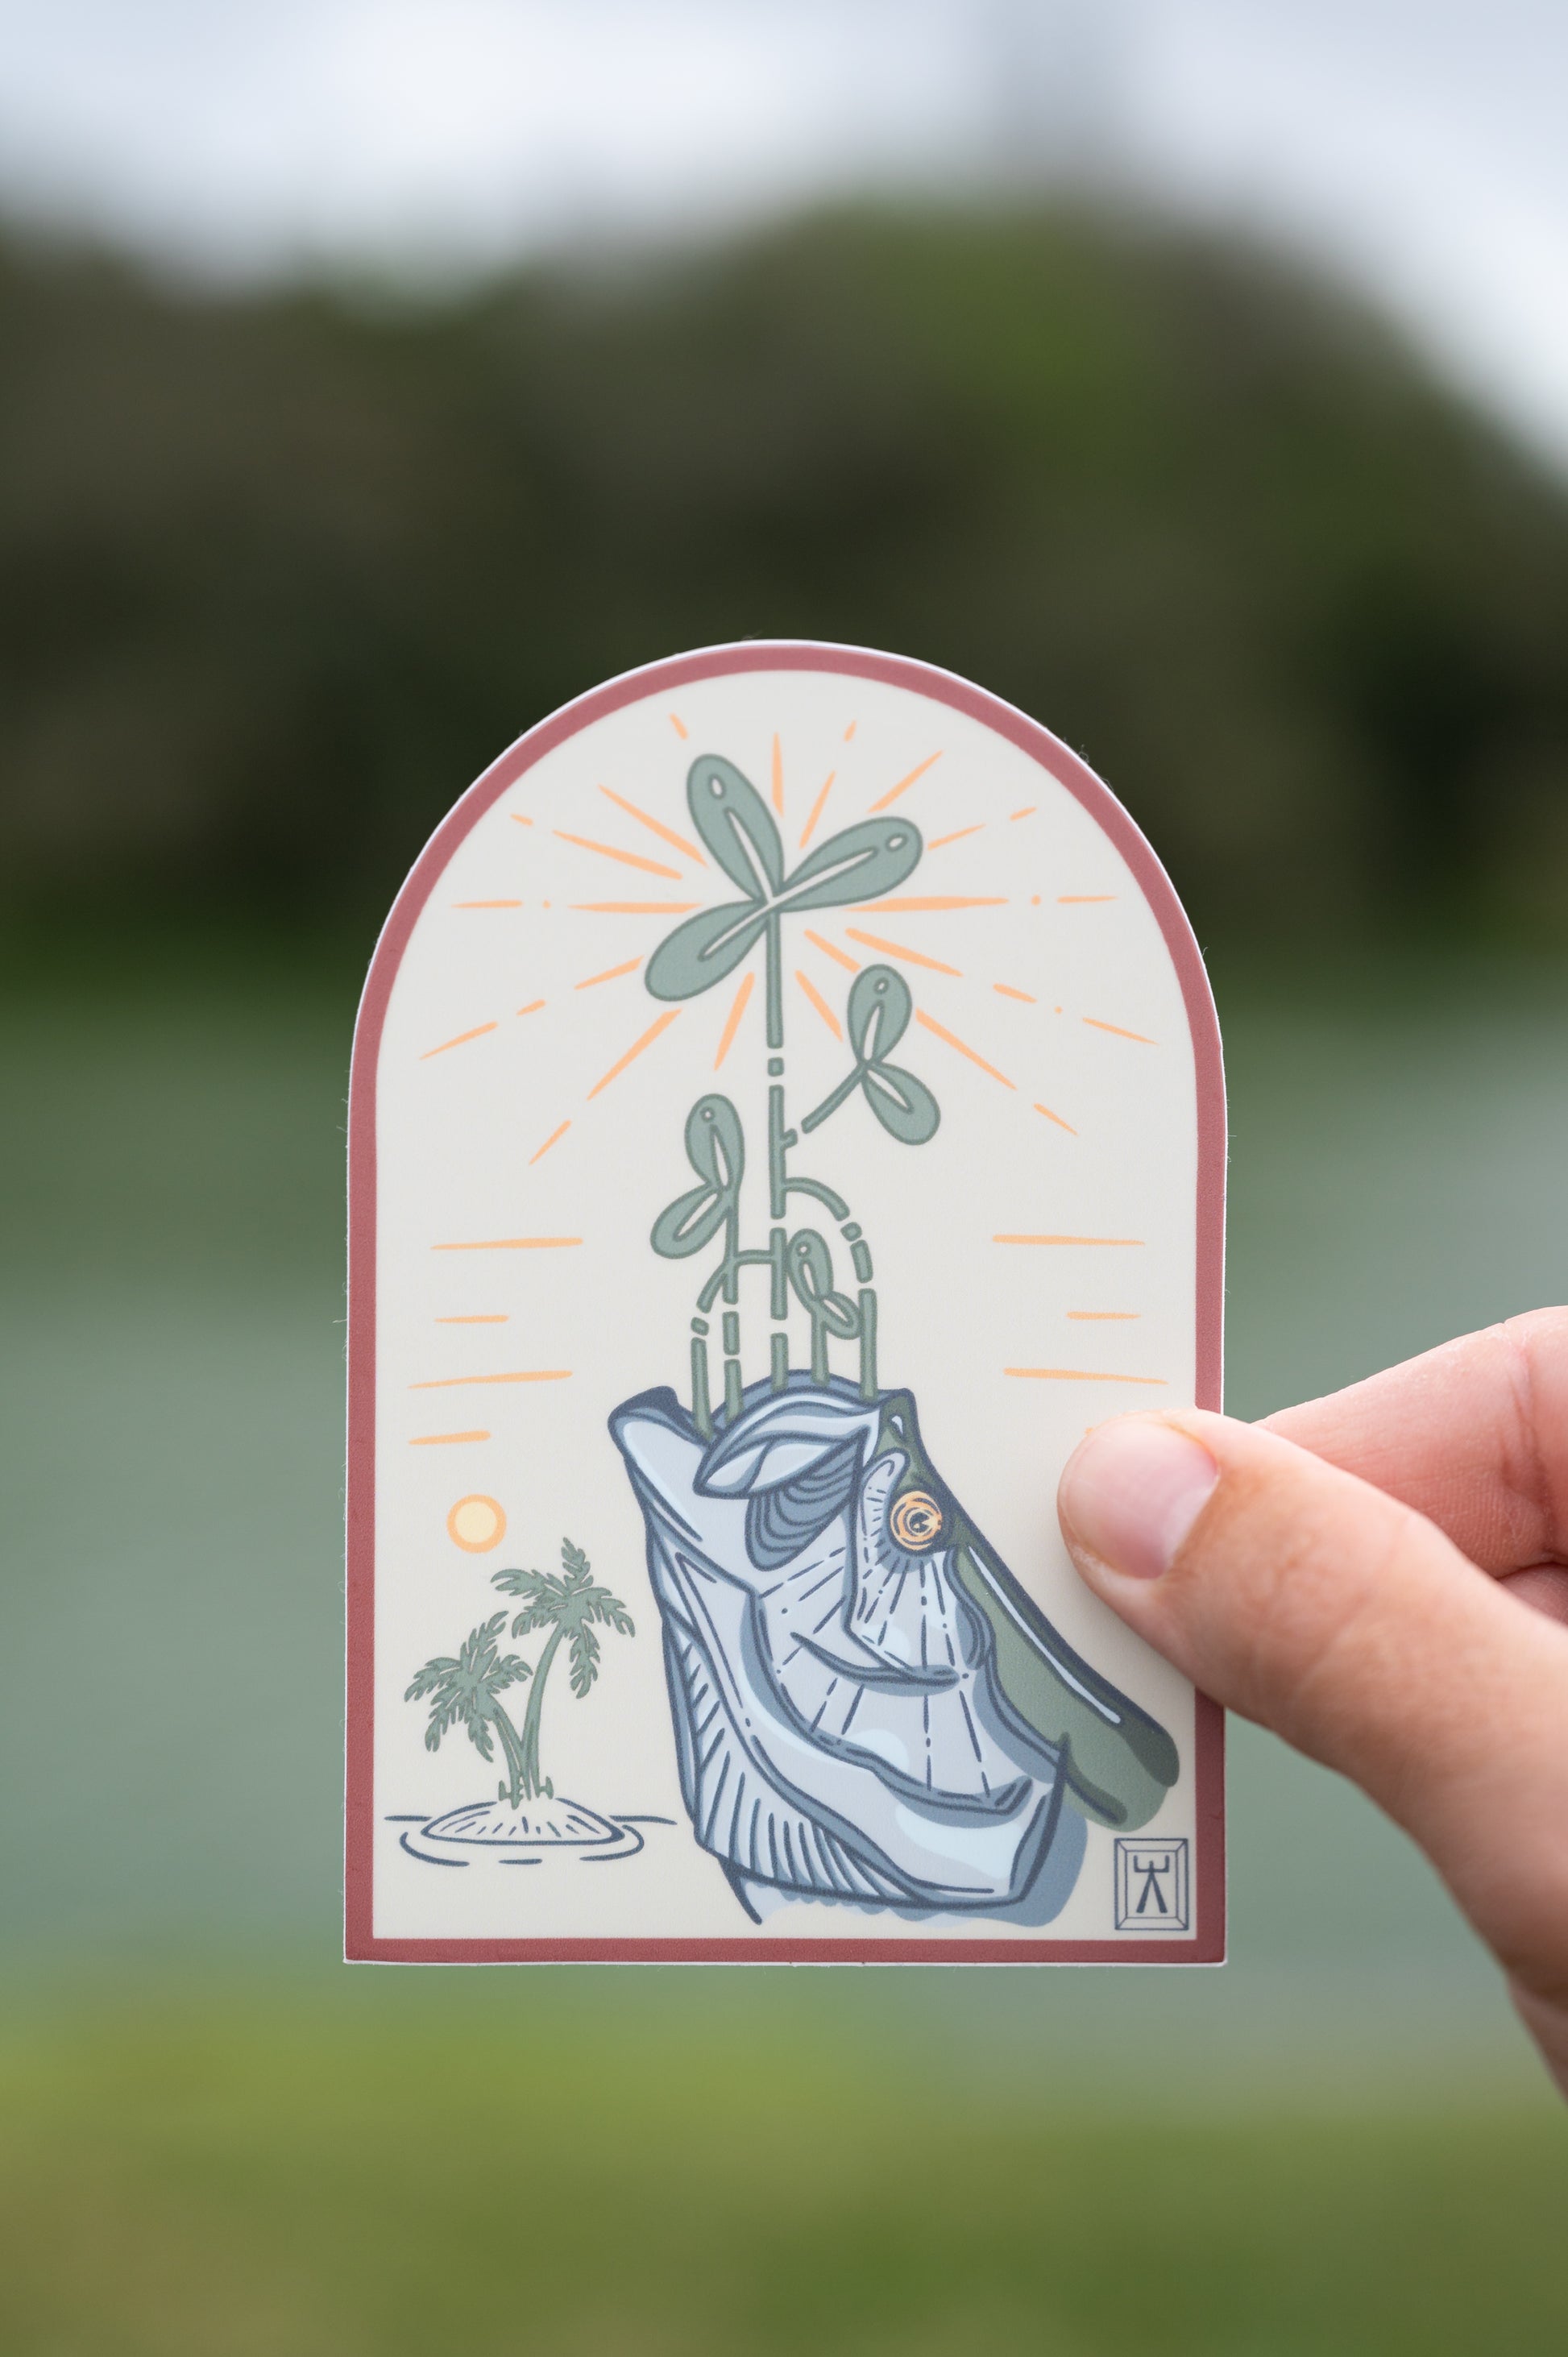 Hand holding mangrove backcountry tarpon sticker